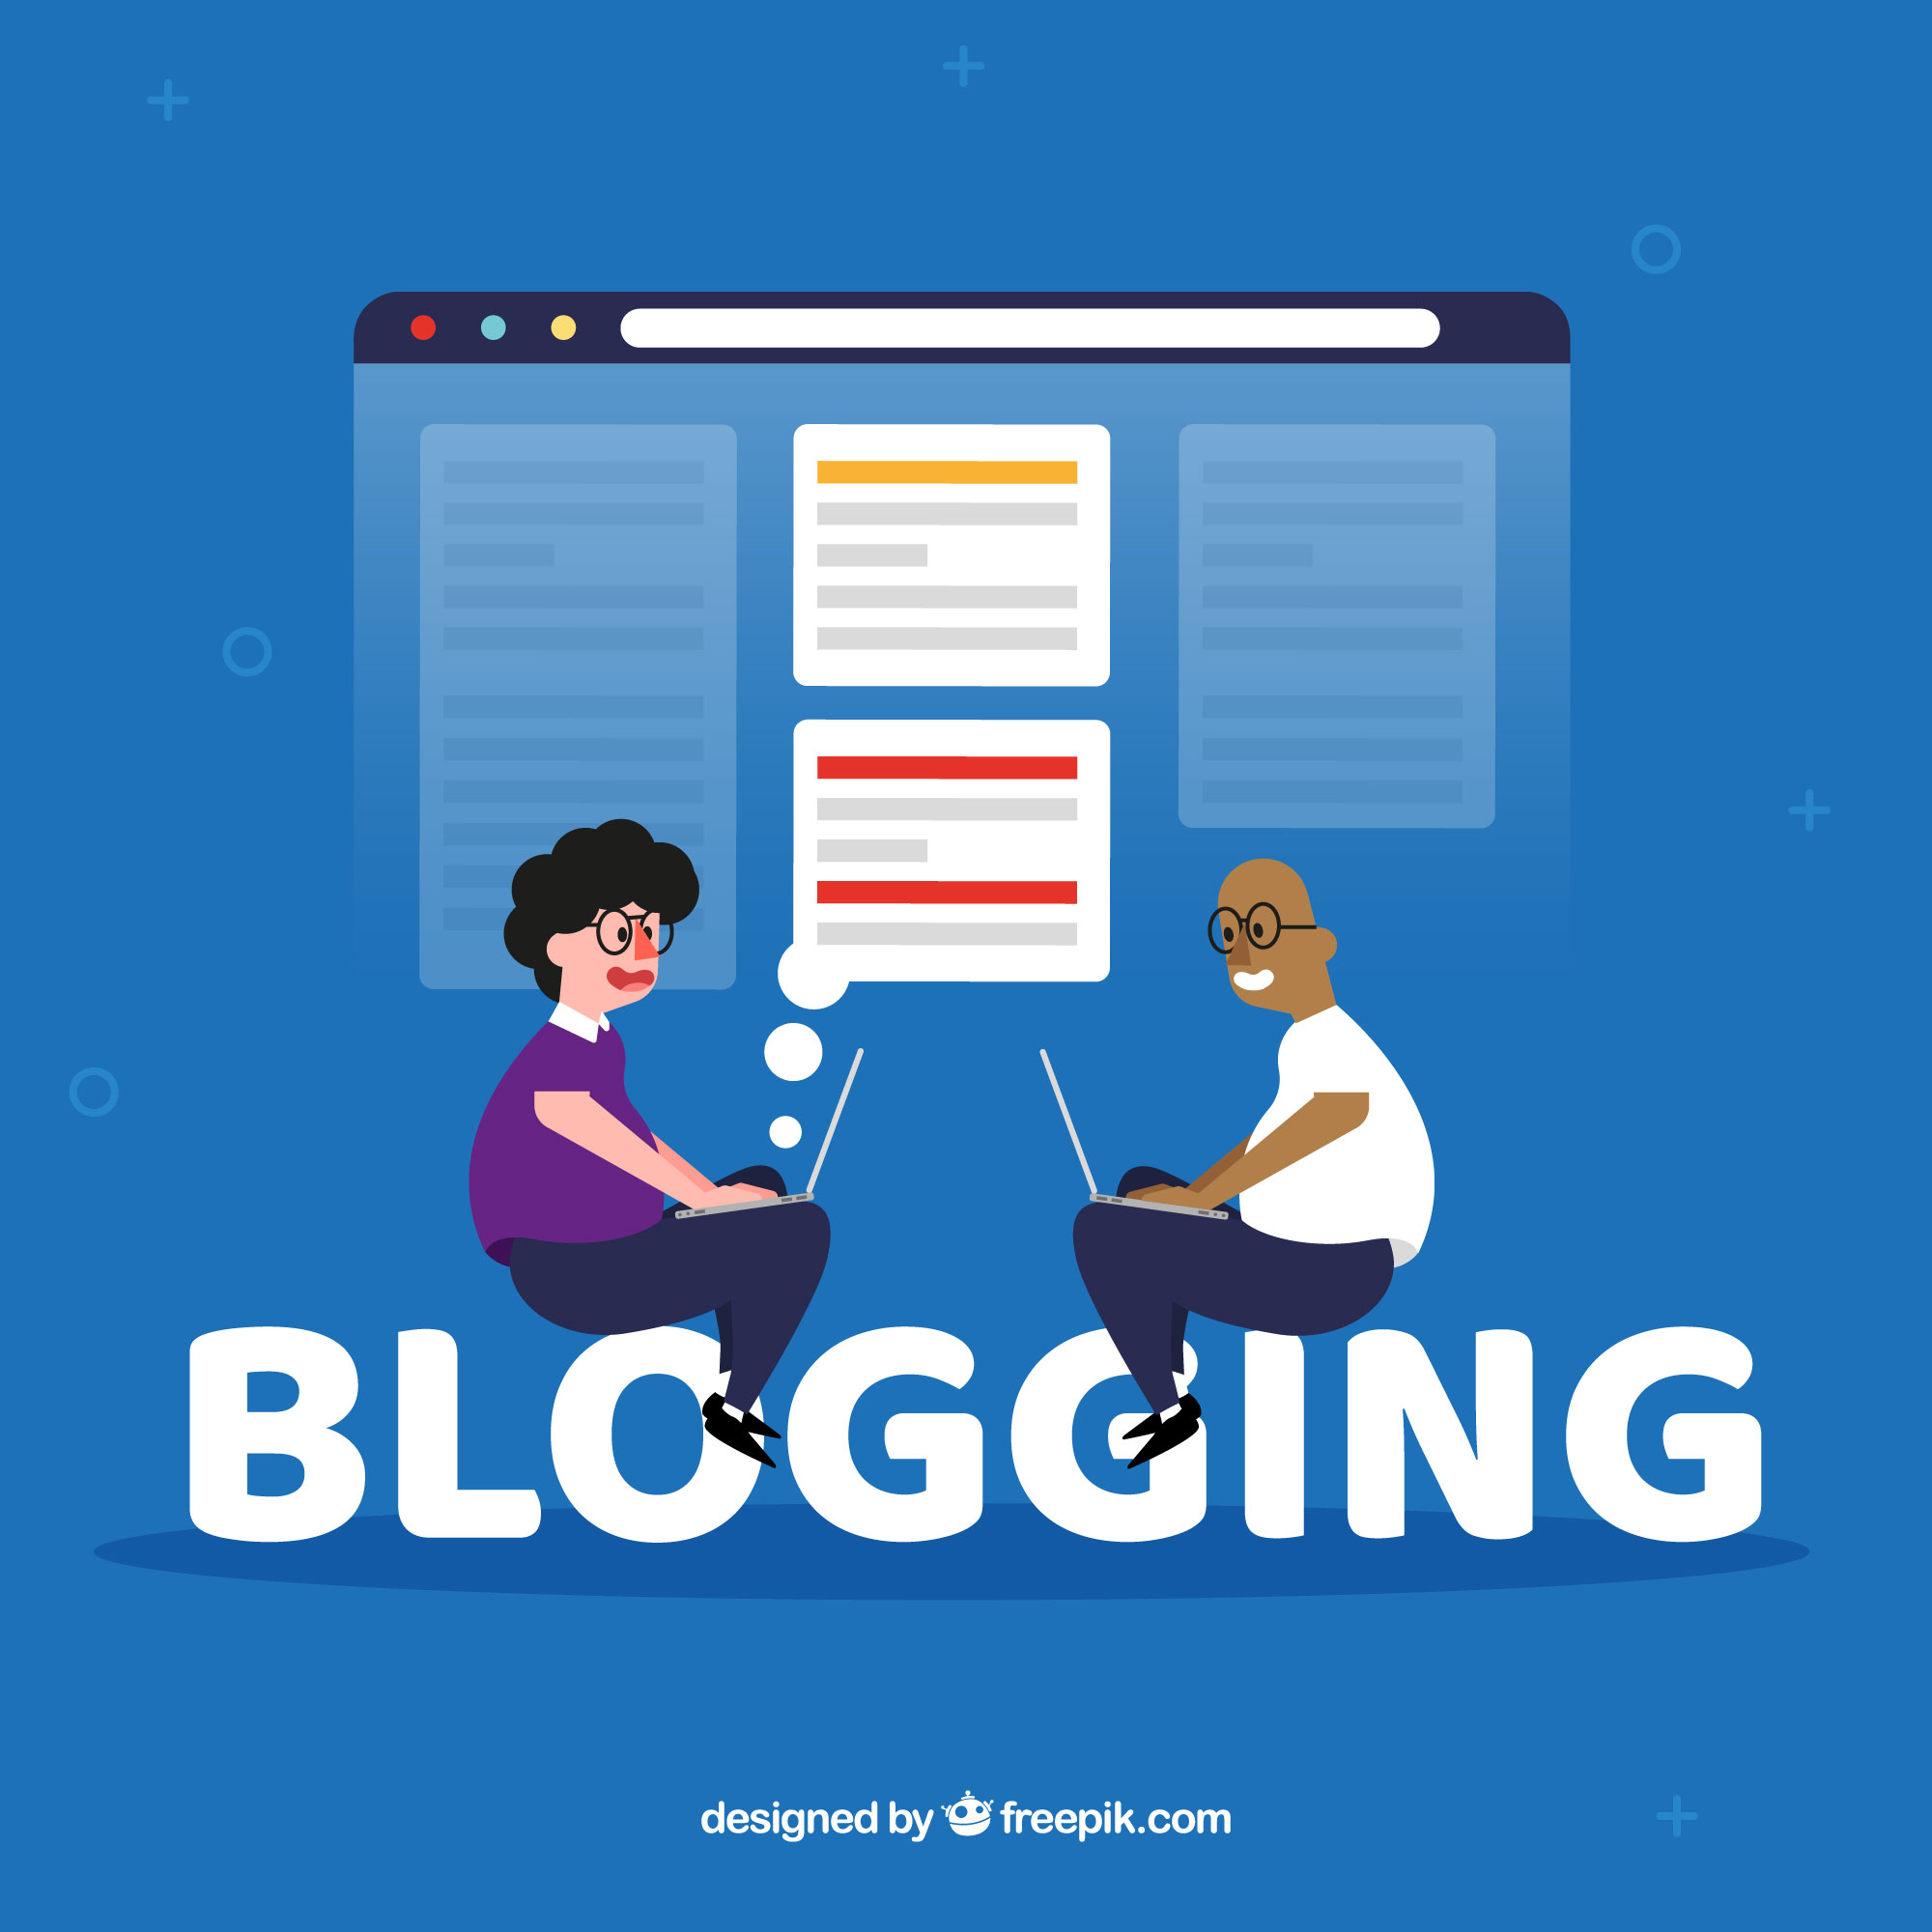 Blog post length